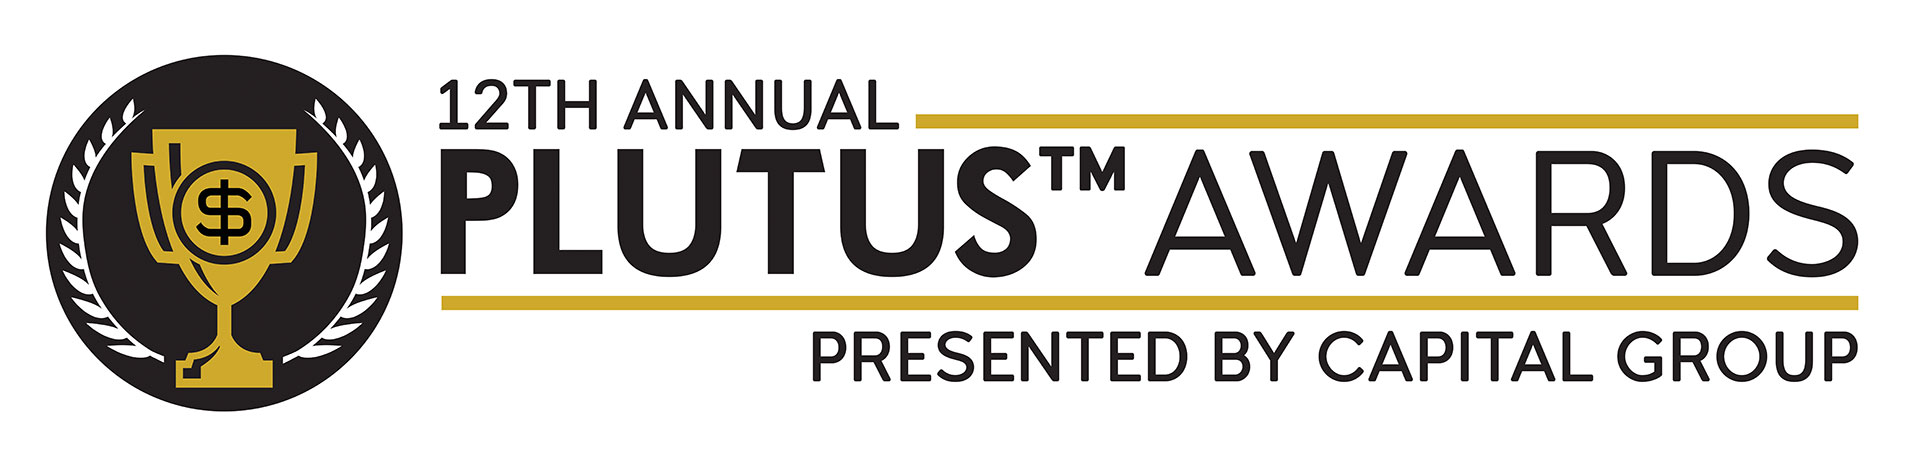 11th Annual Plutus Awards Logo